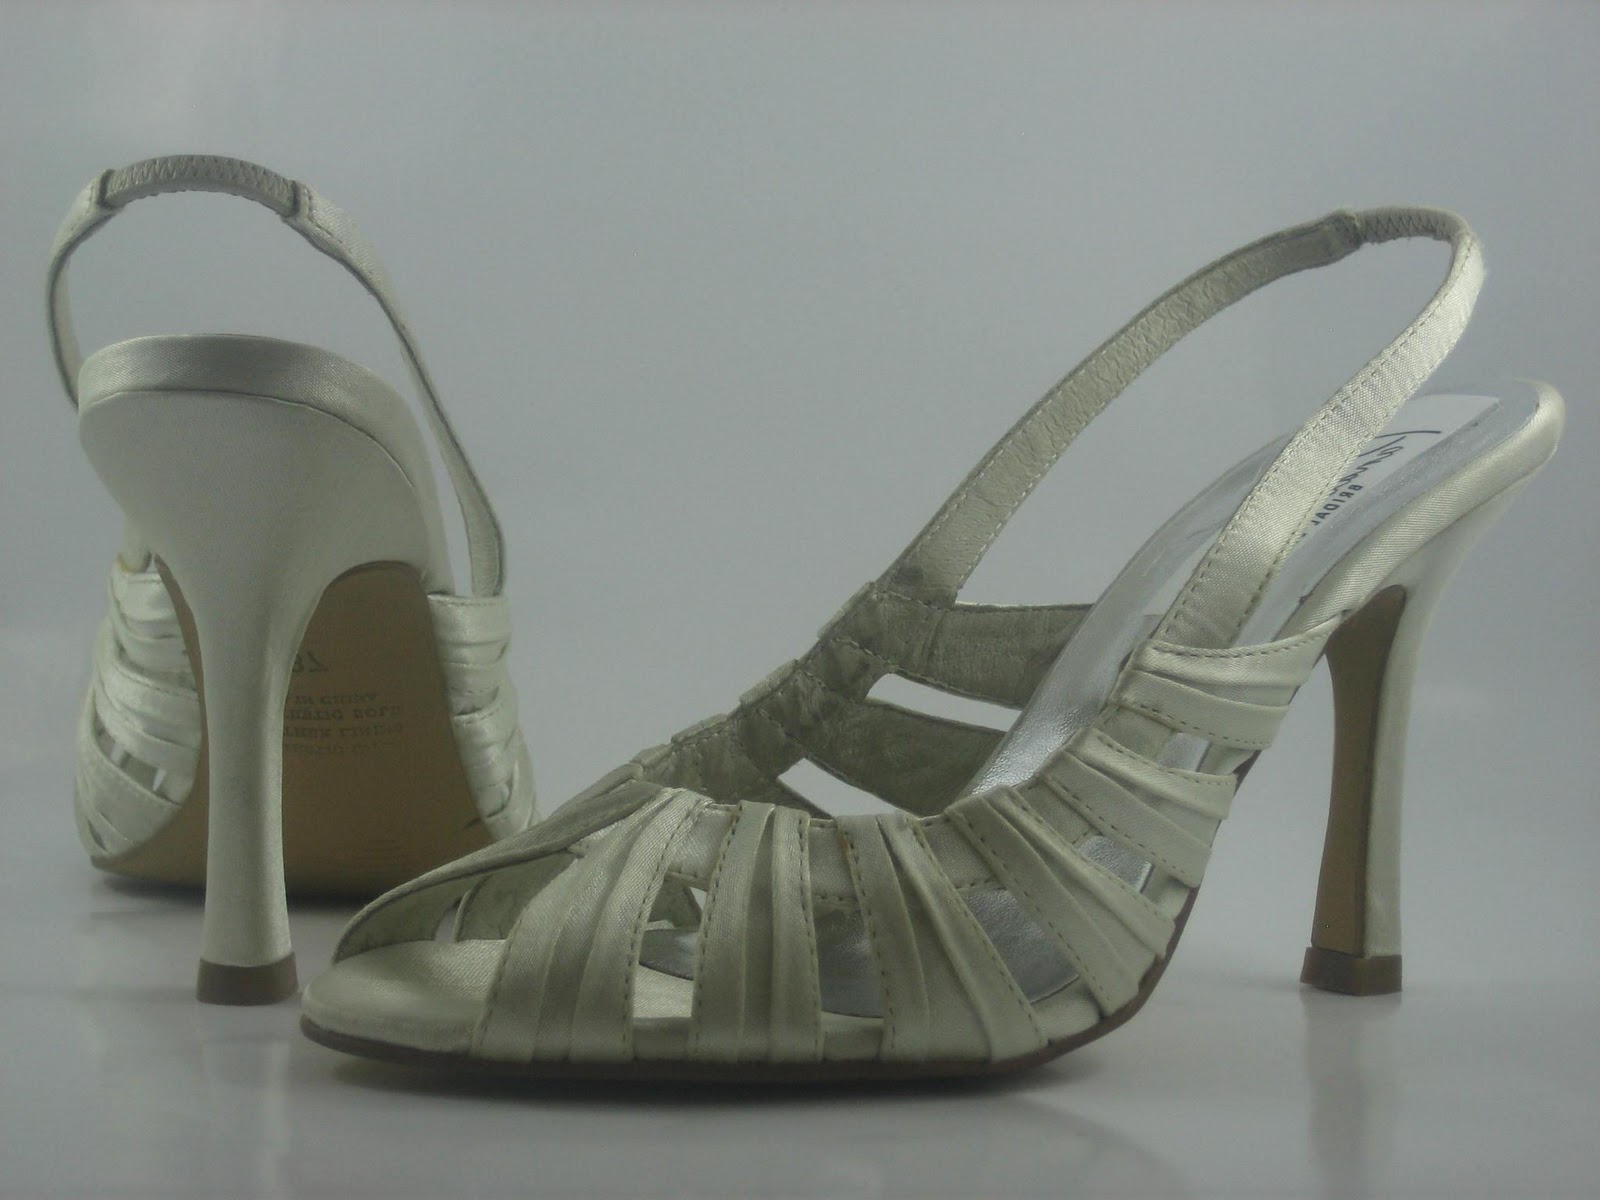 Panache Bridal Shoes - TAMSIN